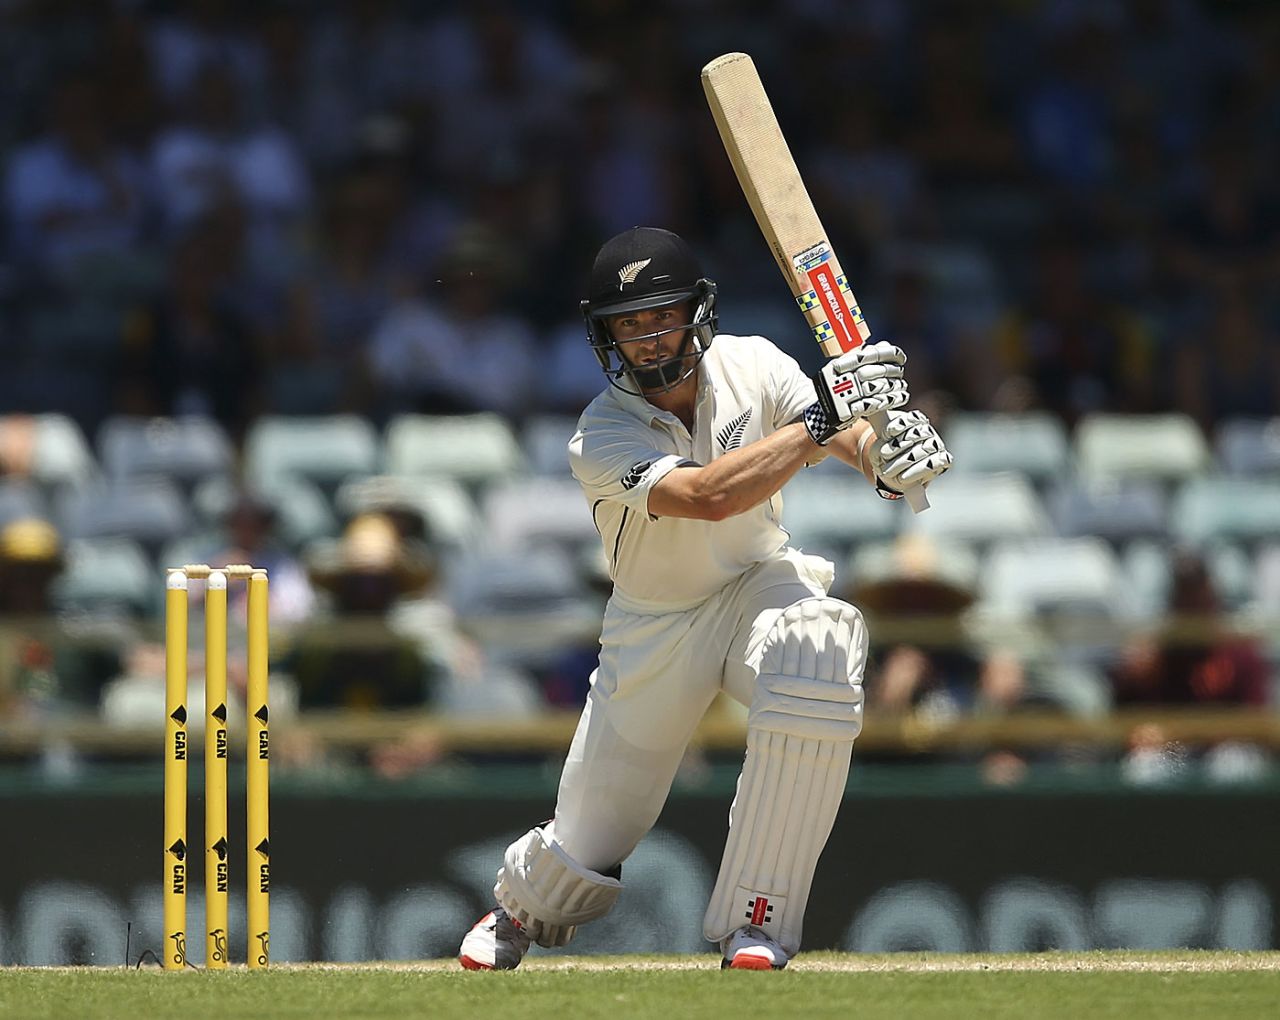 Kane Williamson drives, Australia v New Zealand, 2nd Test, Perth, 3rd day, November 15, 2015